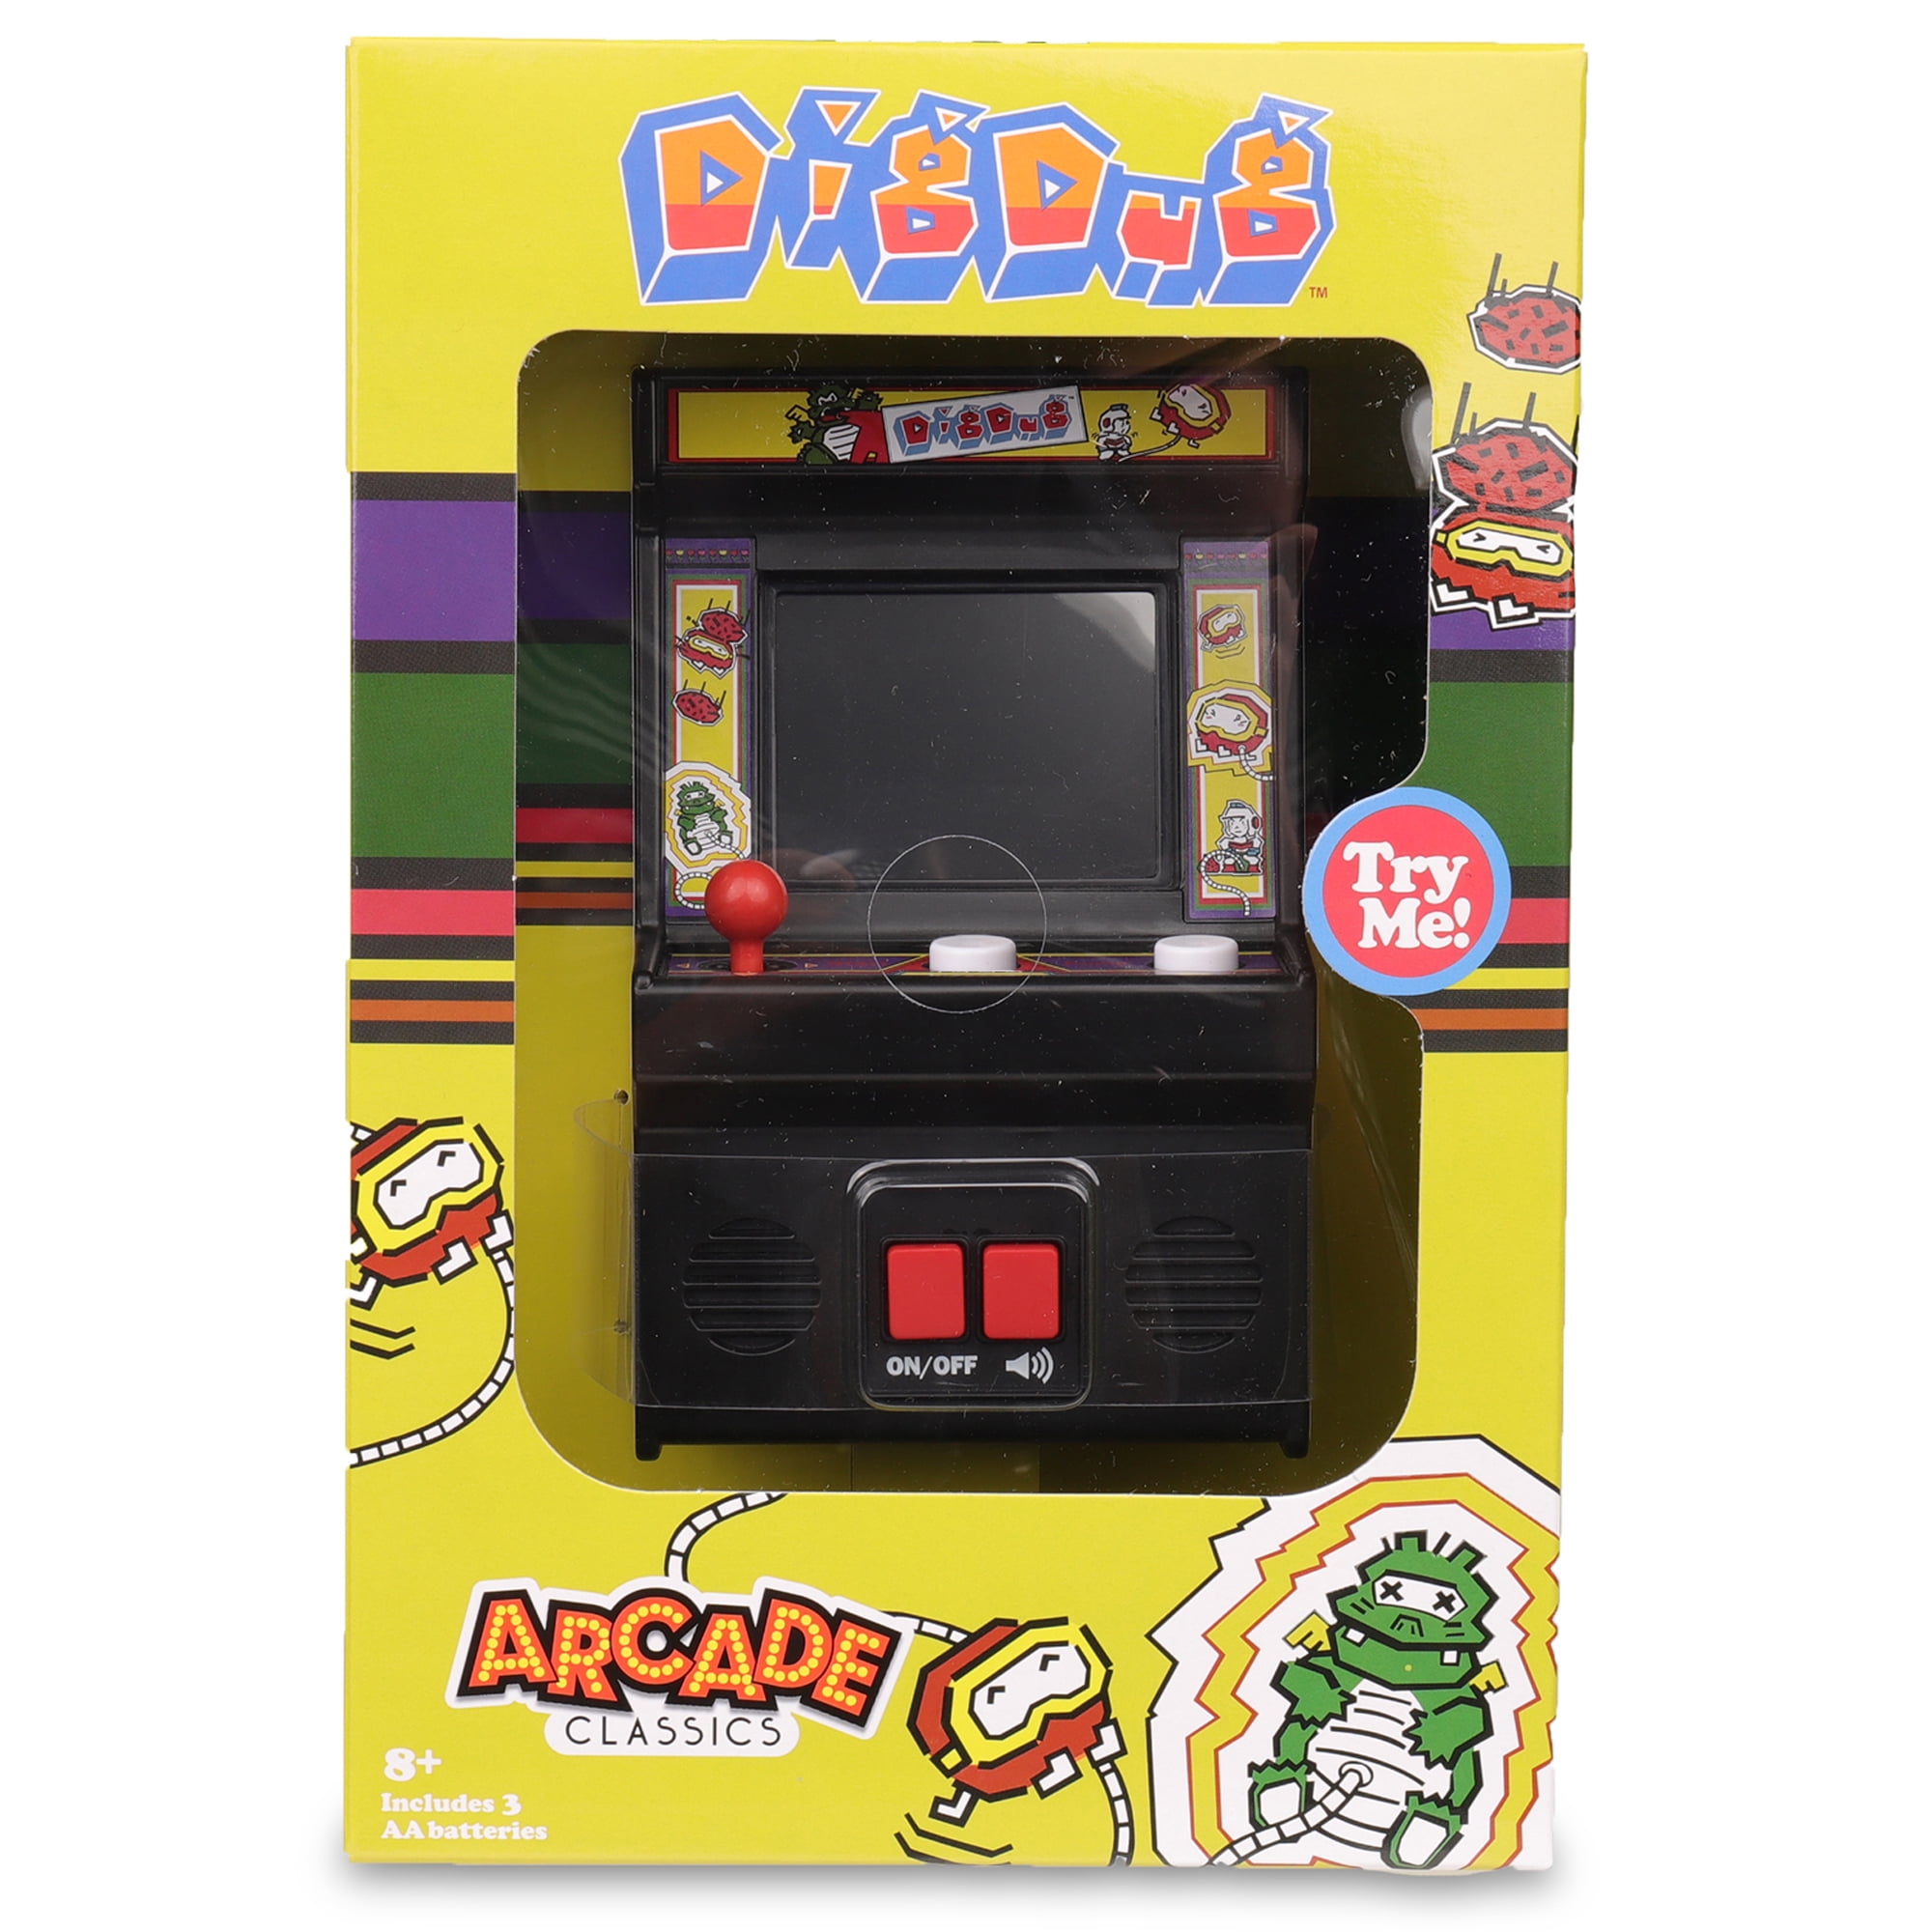 Mini Arcade Classics DigDug Game Handheld Dig Dug Retro Cabinet 13 Basic Fun W5 for sale online 